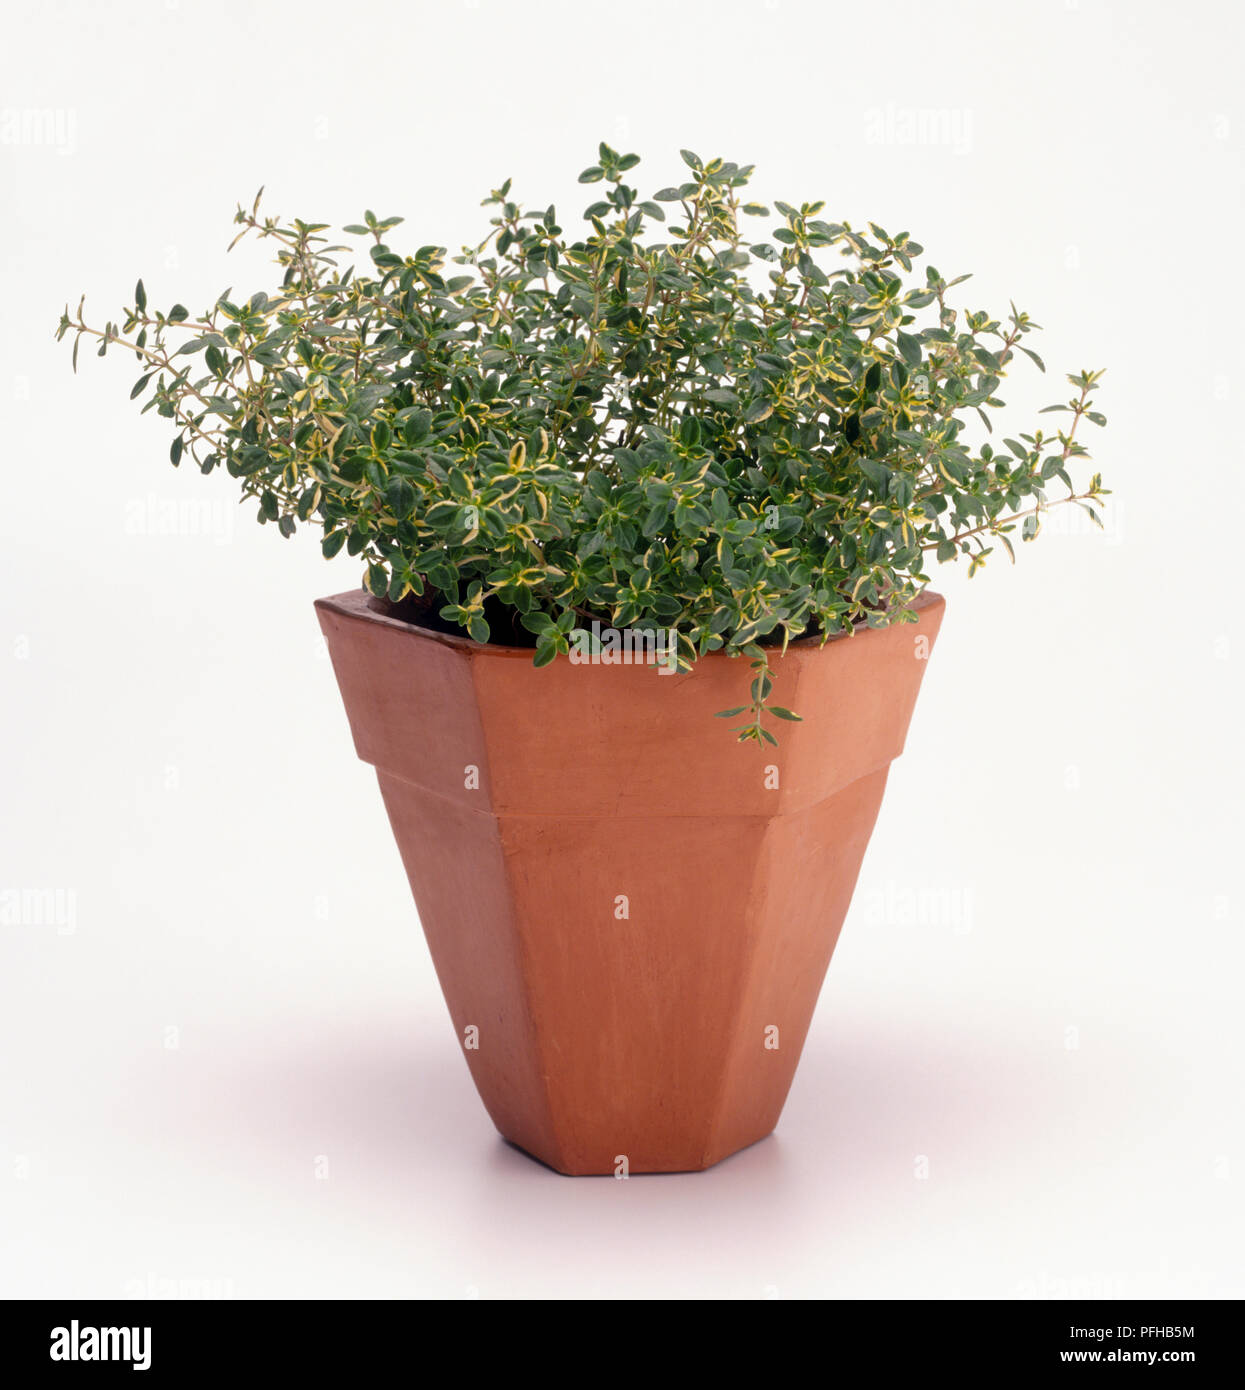 Thymus x Citriodorus (Lemon-scented thyme) in plant pot Stock Photo